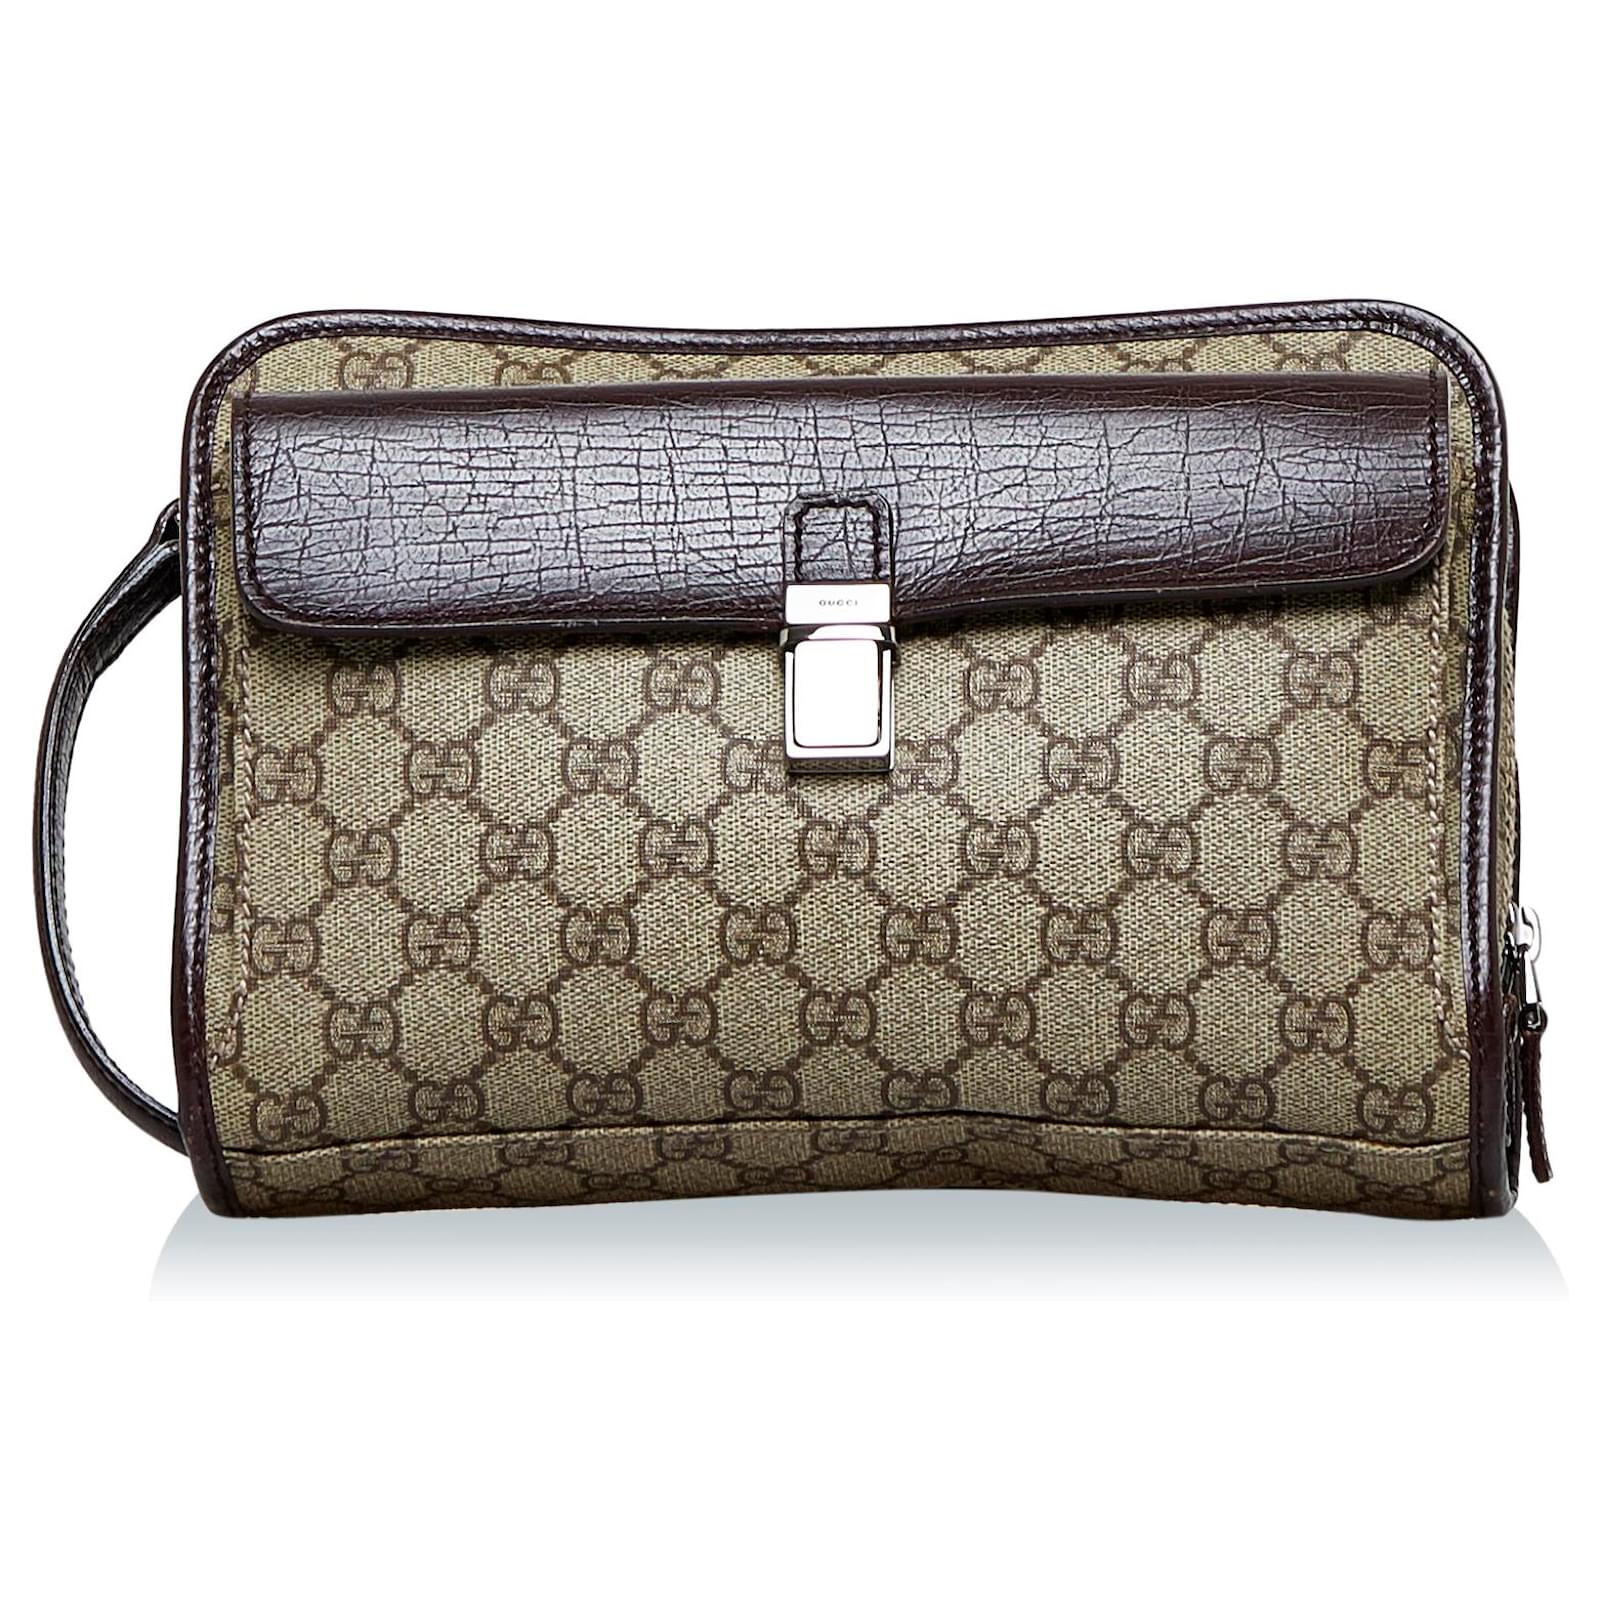 Gucci - Padlock GG supreme fabric handbag Beige - The Corner